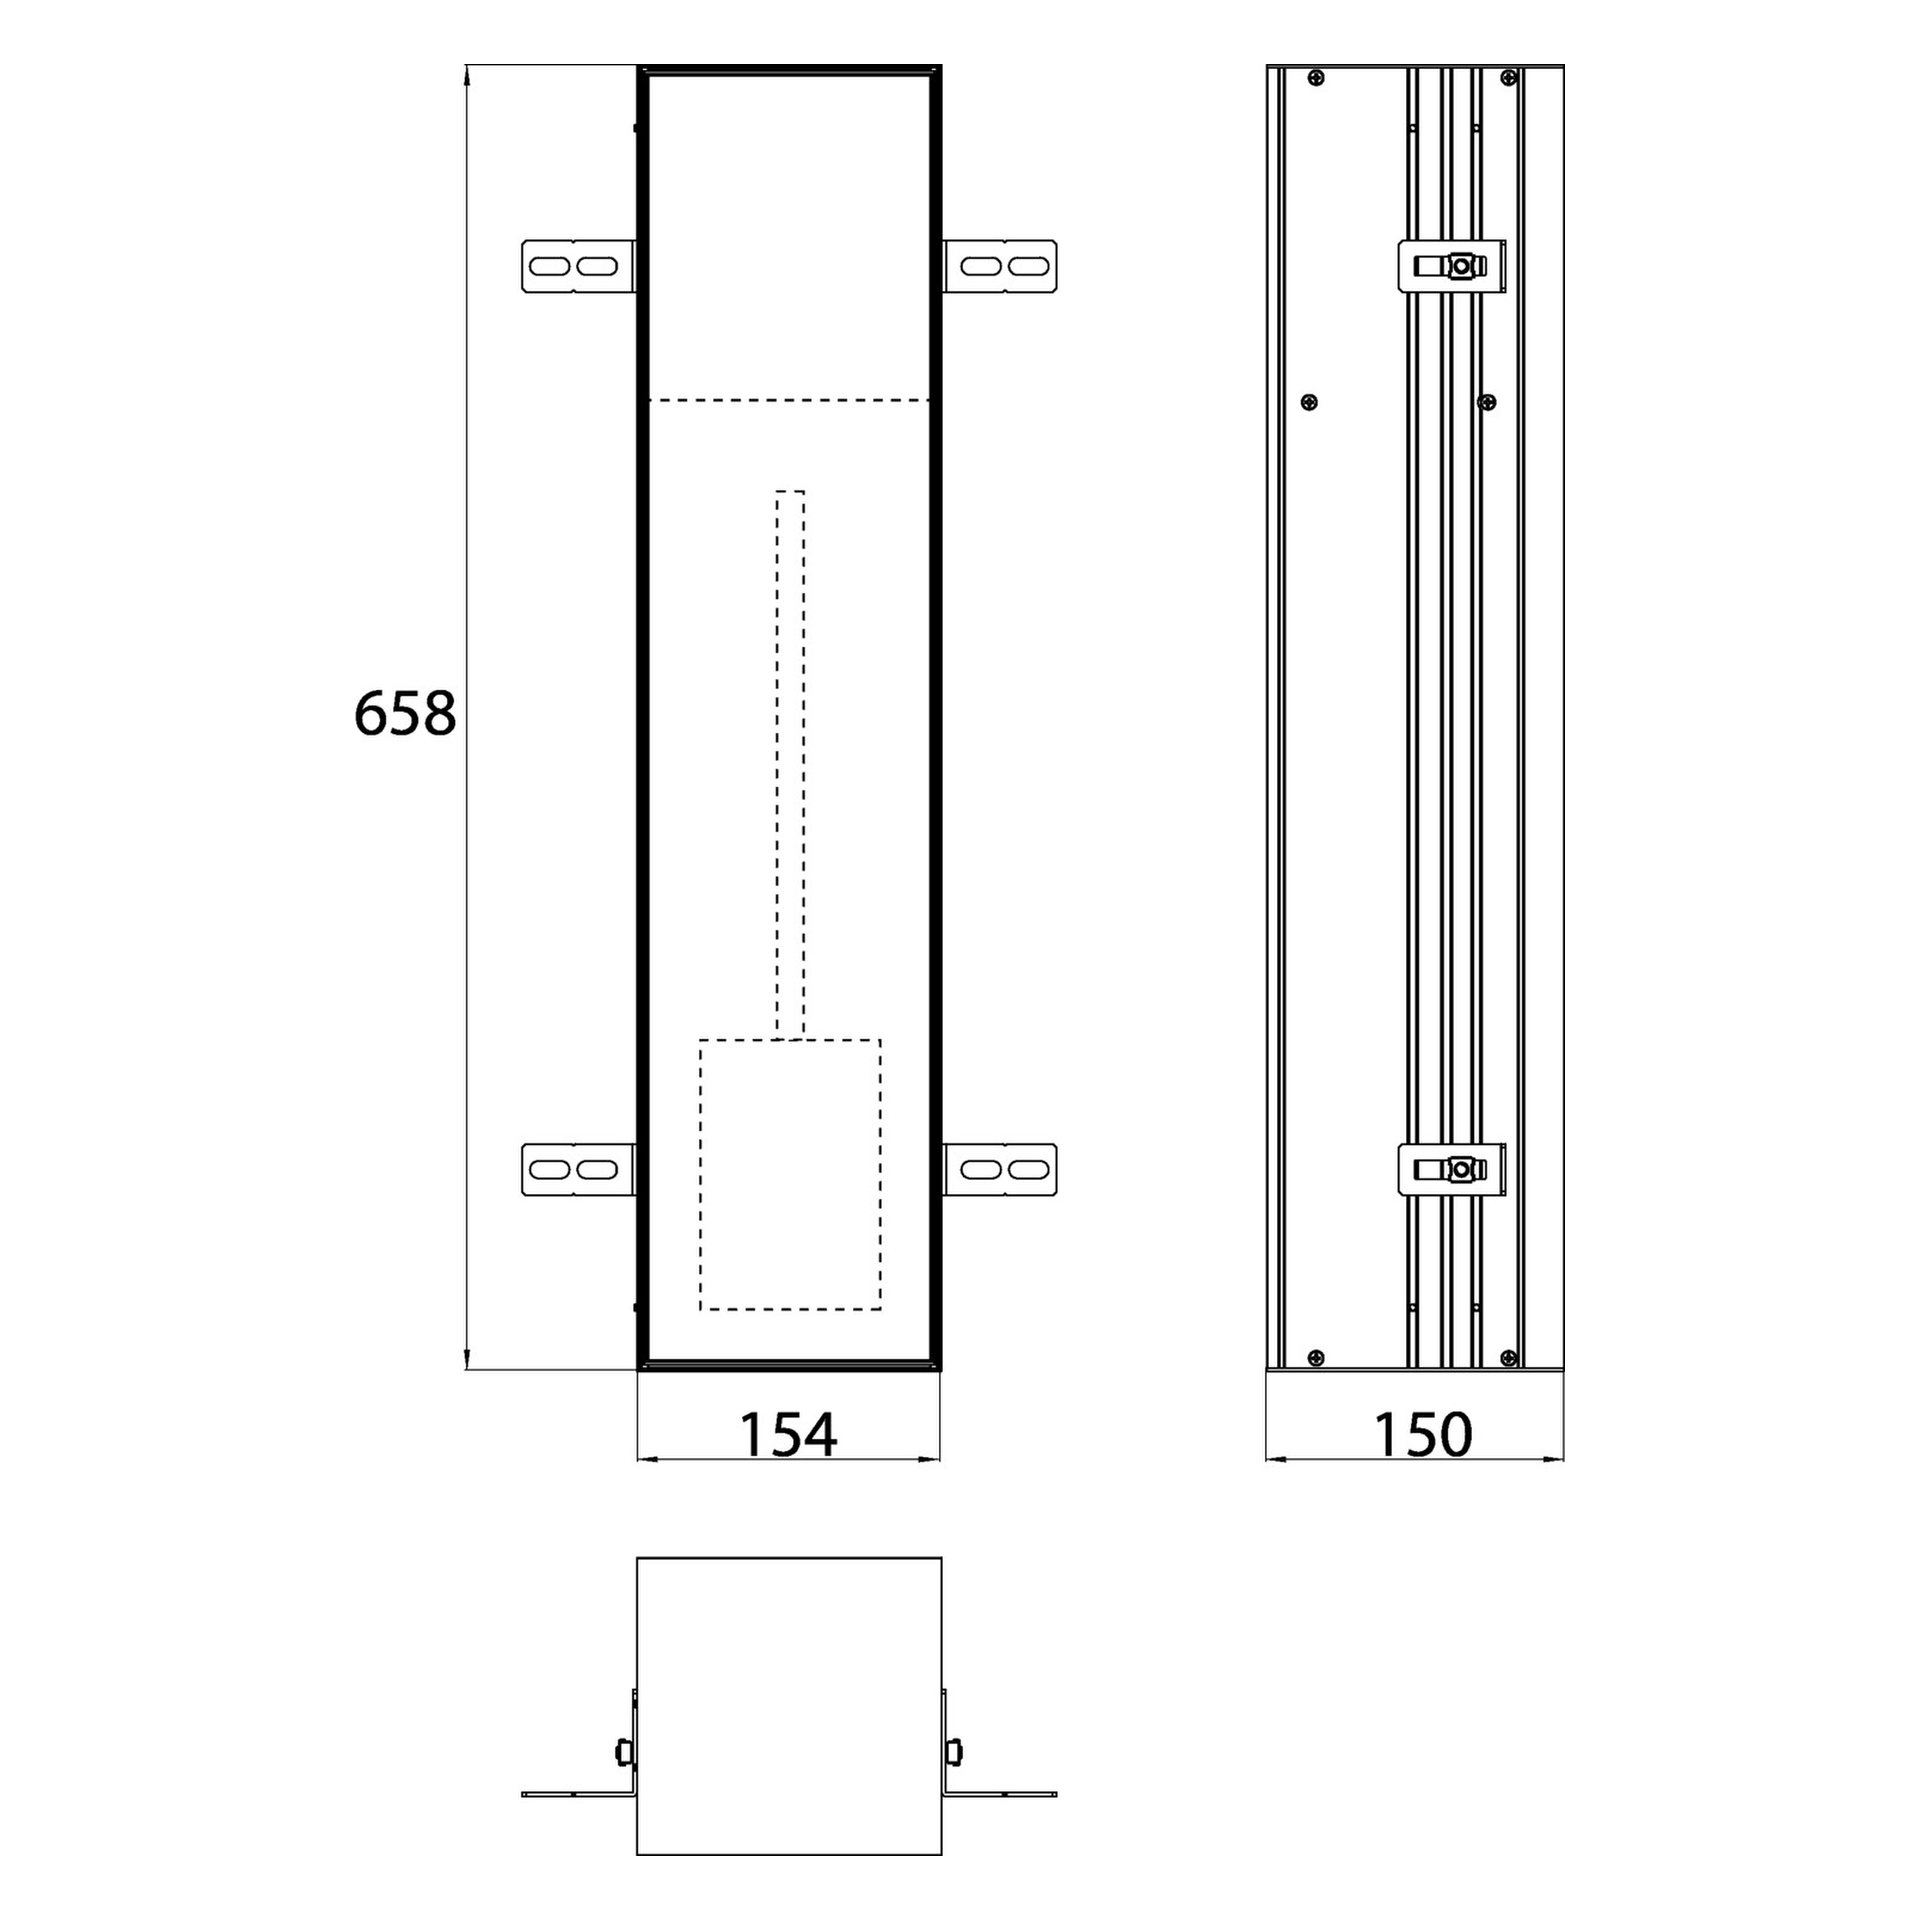 WC-Modul asis plus, Unterputz Papierentnahme oben, 658 mm, Tür links